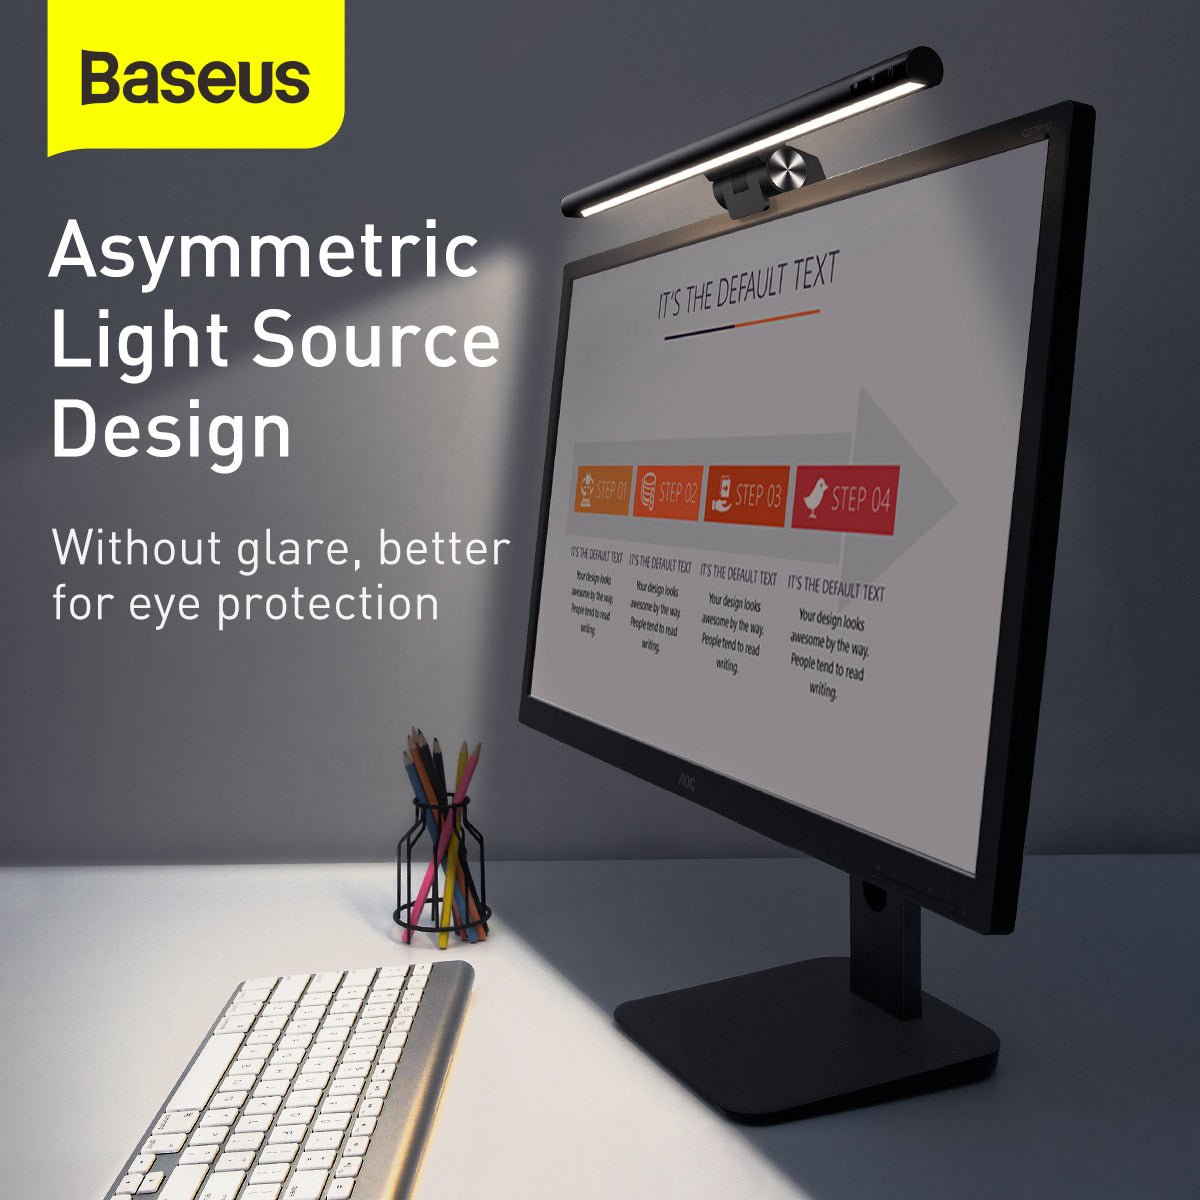 Baseus i-wok Series USB Asymmetric Light Source Screen Hanging Light (Youth)